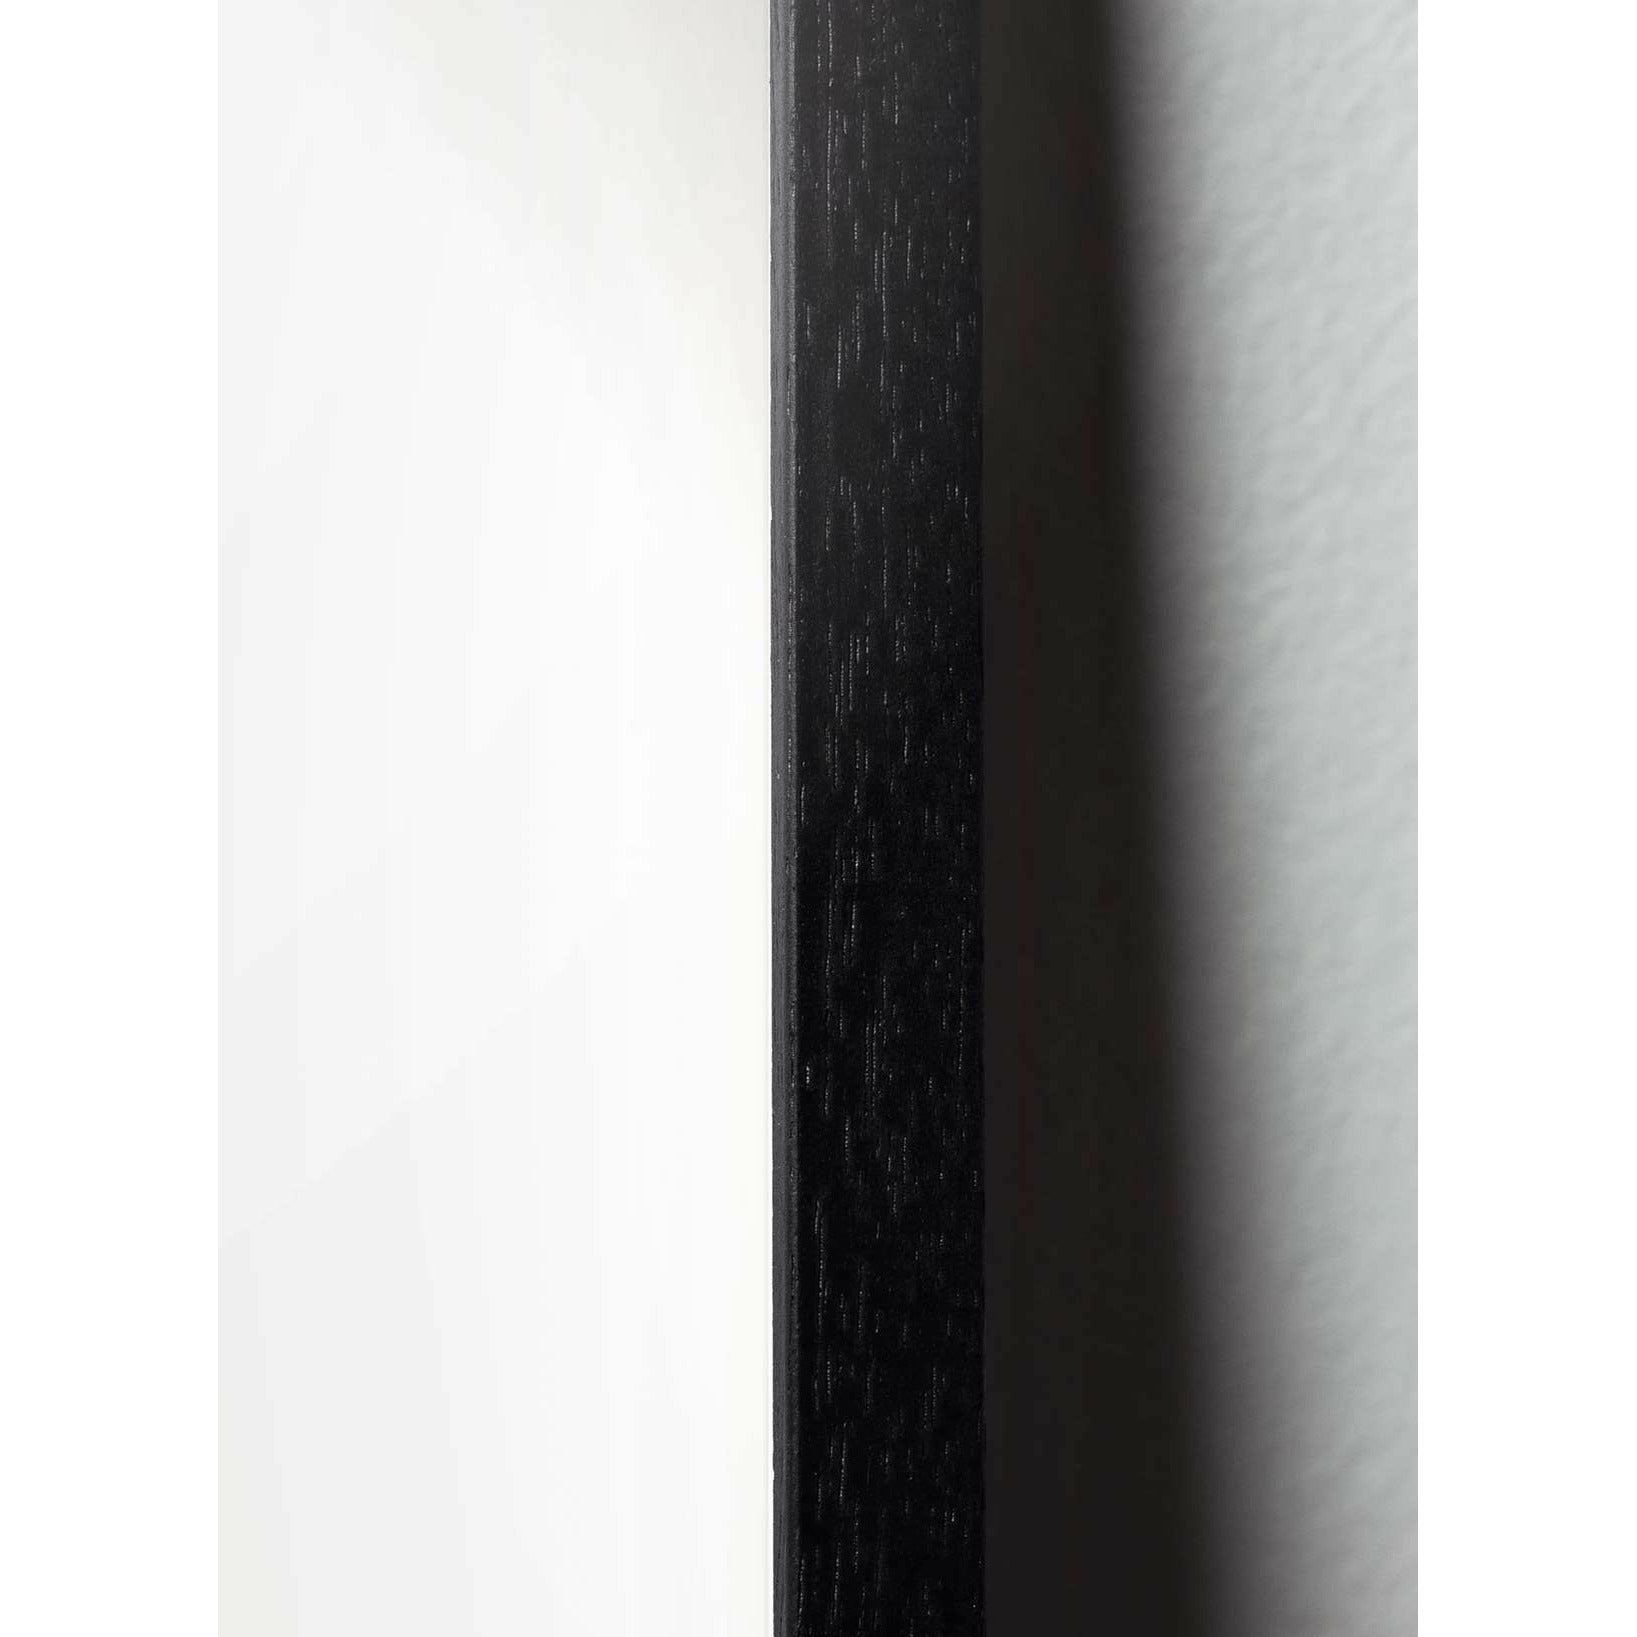 brainchild Munan ristimuodon juliste, kehys mustana lakattuun puuhun 30x40 cm, musta